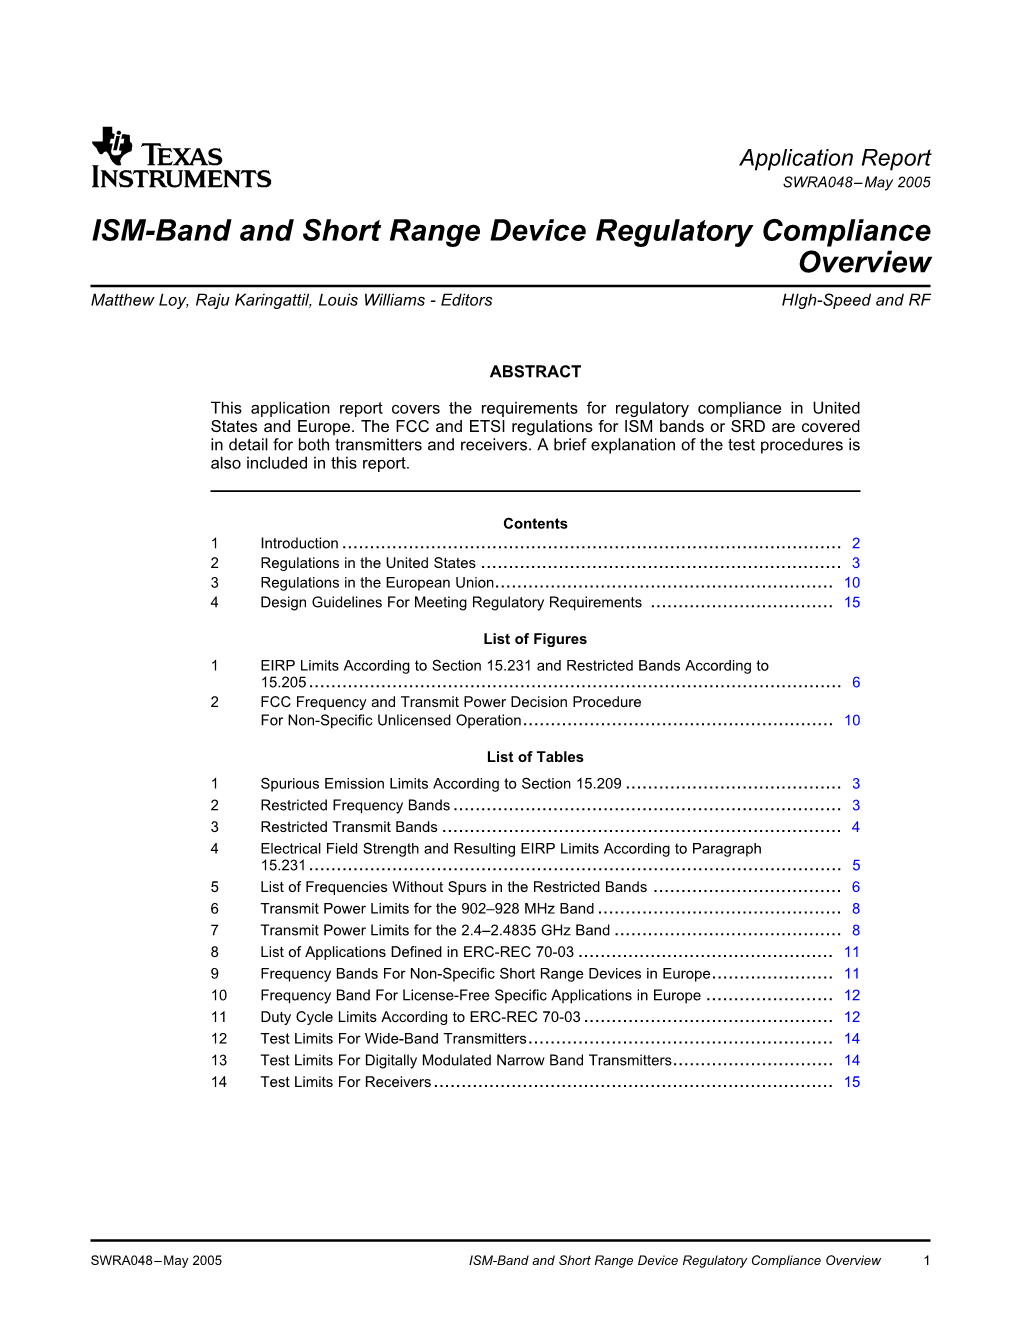 ISM-Band and Short Range Device Regulatory Compliance Overview Matthew Loy, Raju Karingattil, Louis Williams - Editors